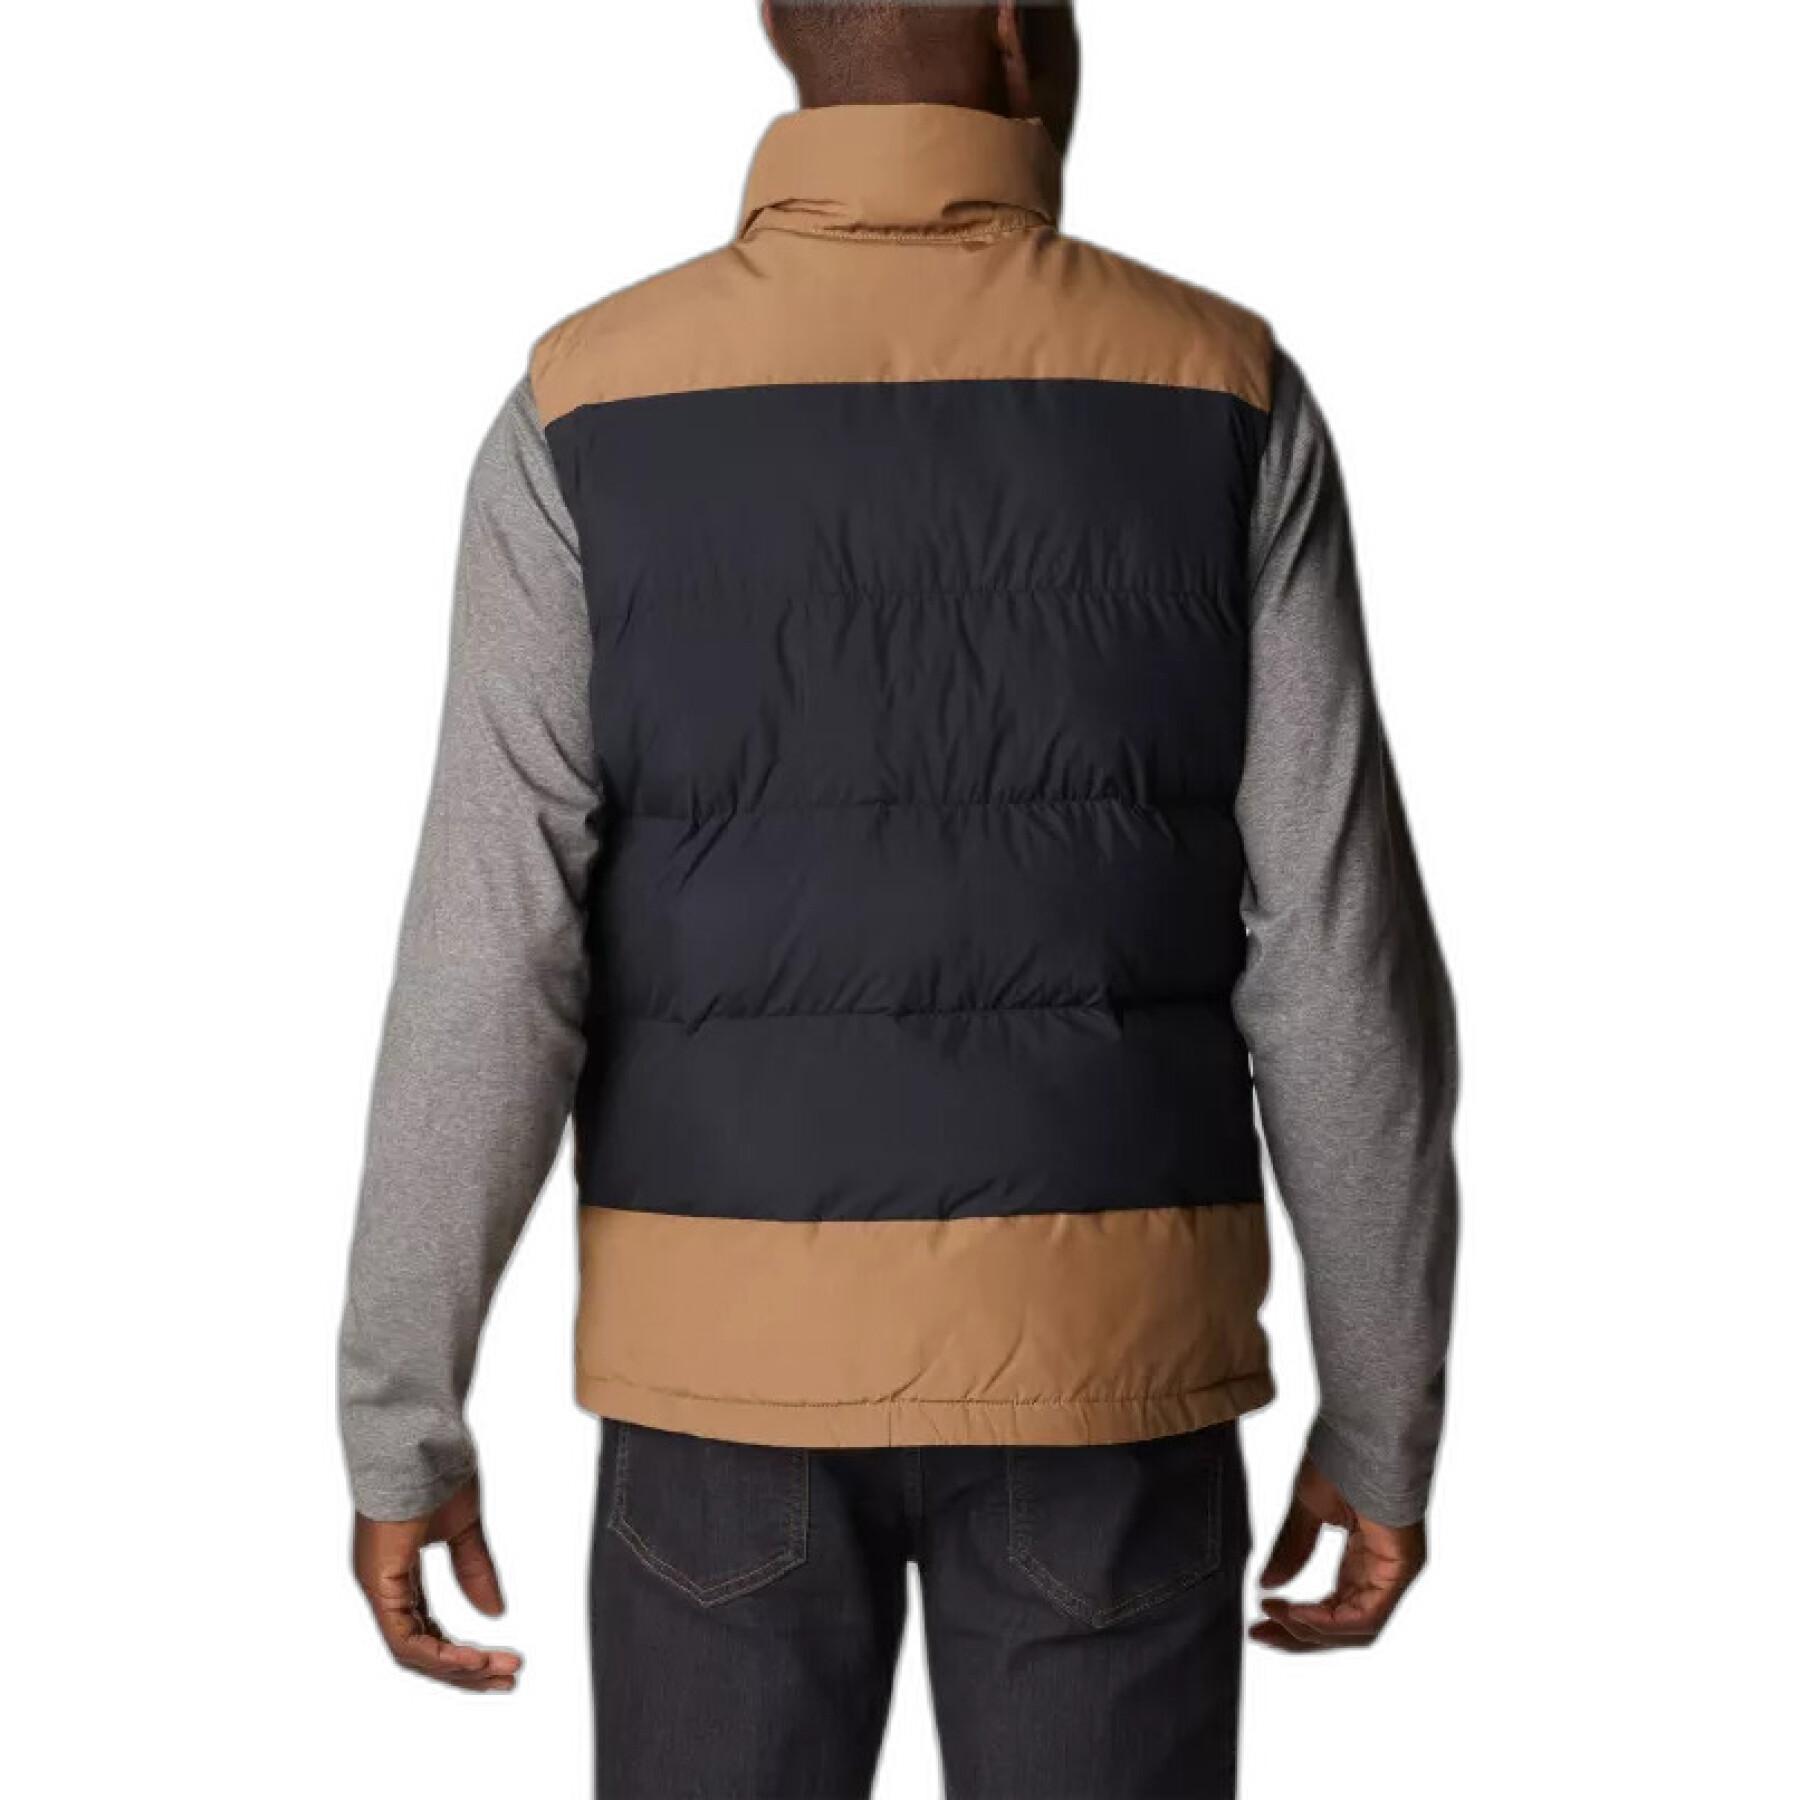 Sleeveless jacket Columbia Marquam Peak Fusion™